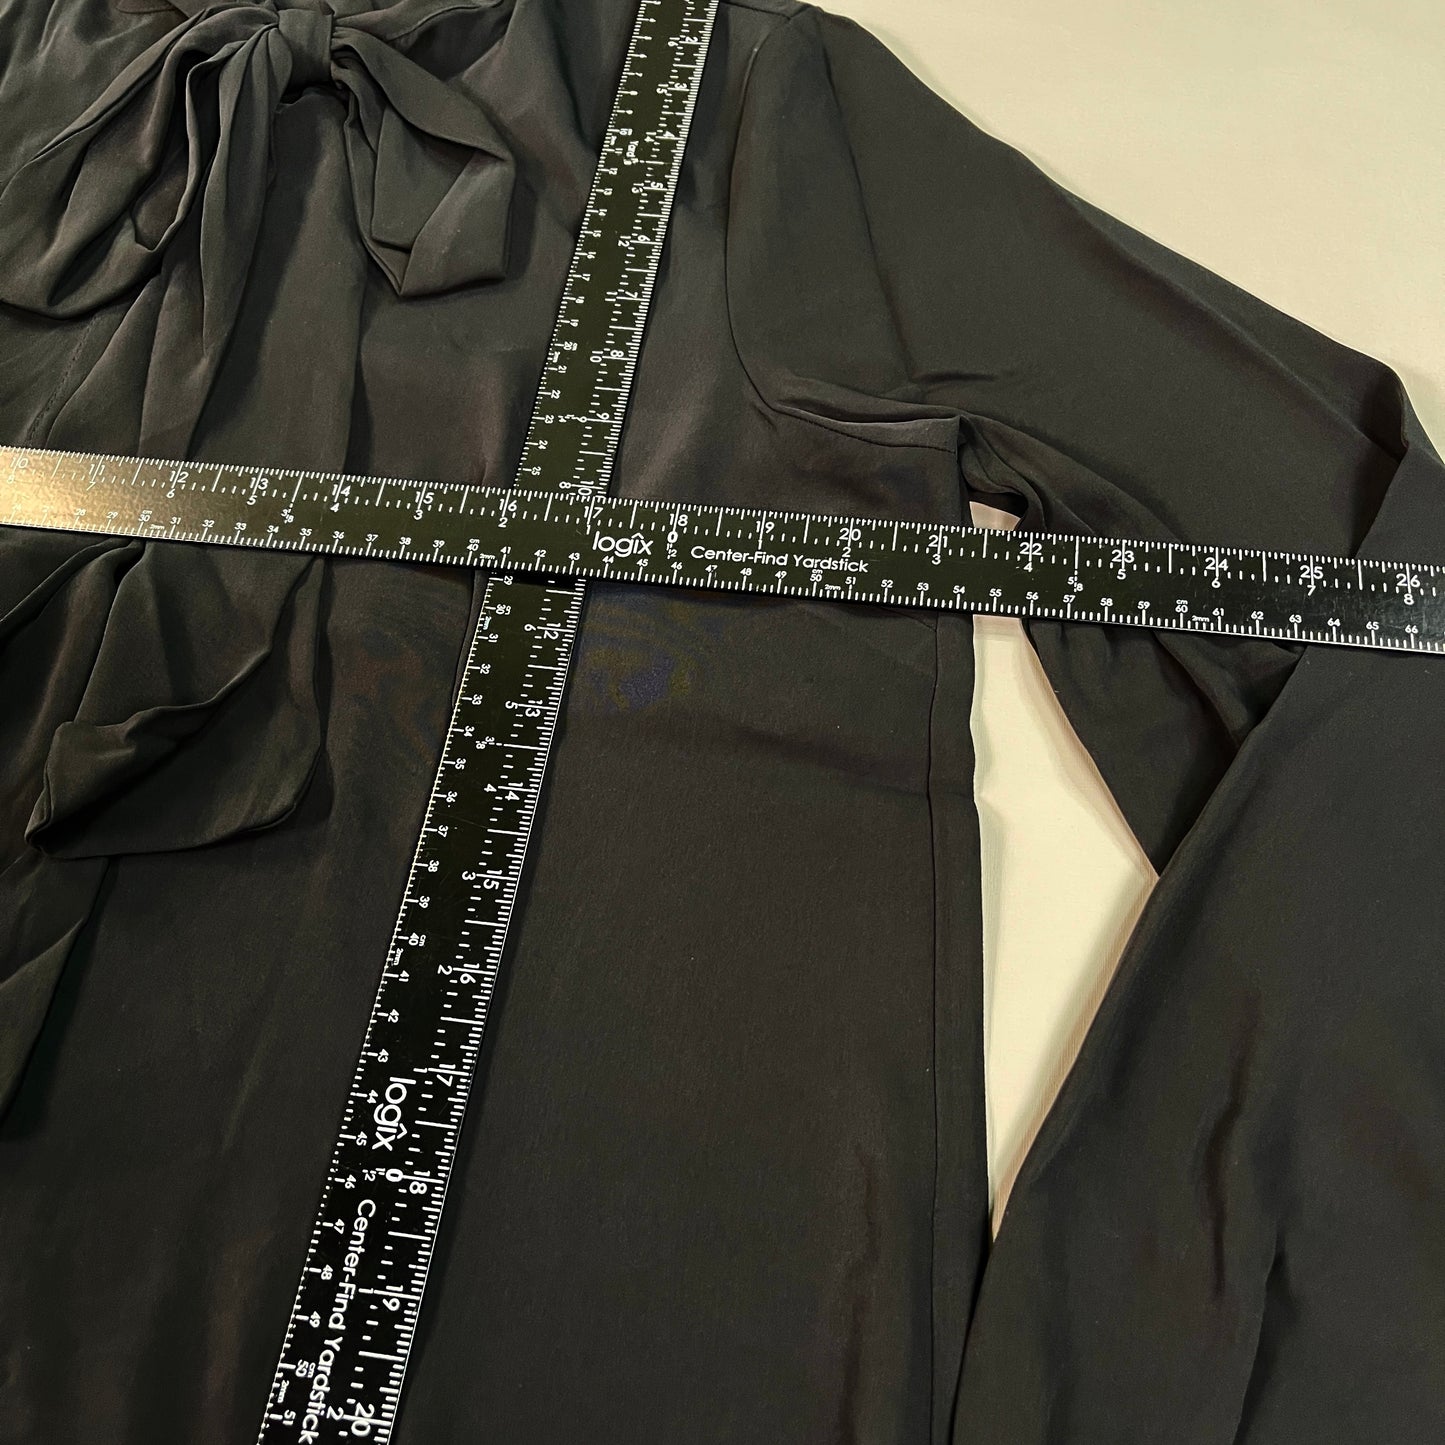 MARTHA STEWART Woven Front Button Blouse Top Tie Neck Women's Sz M Black (New)